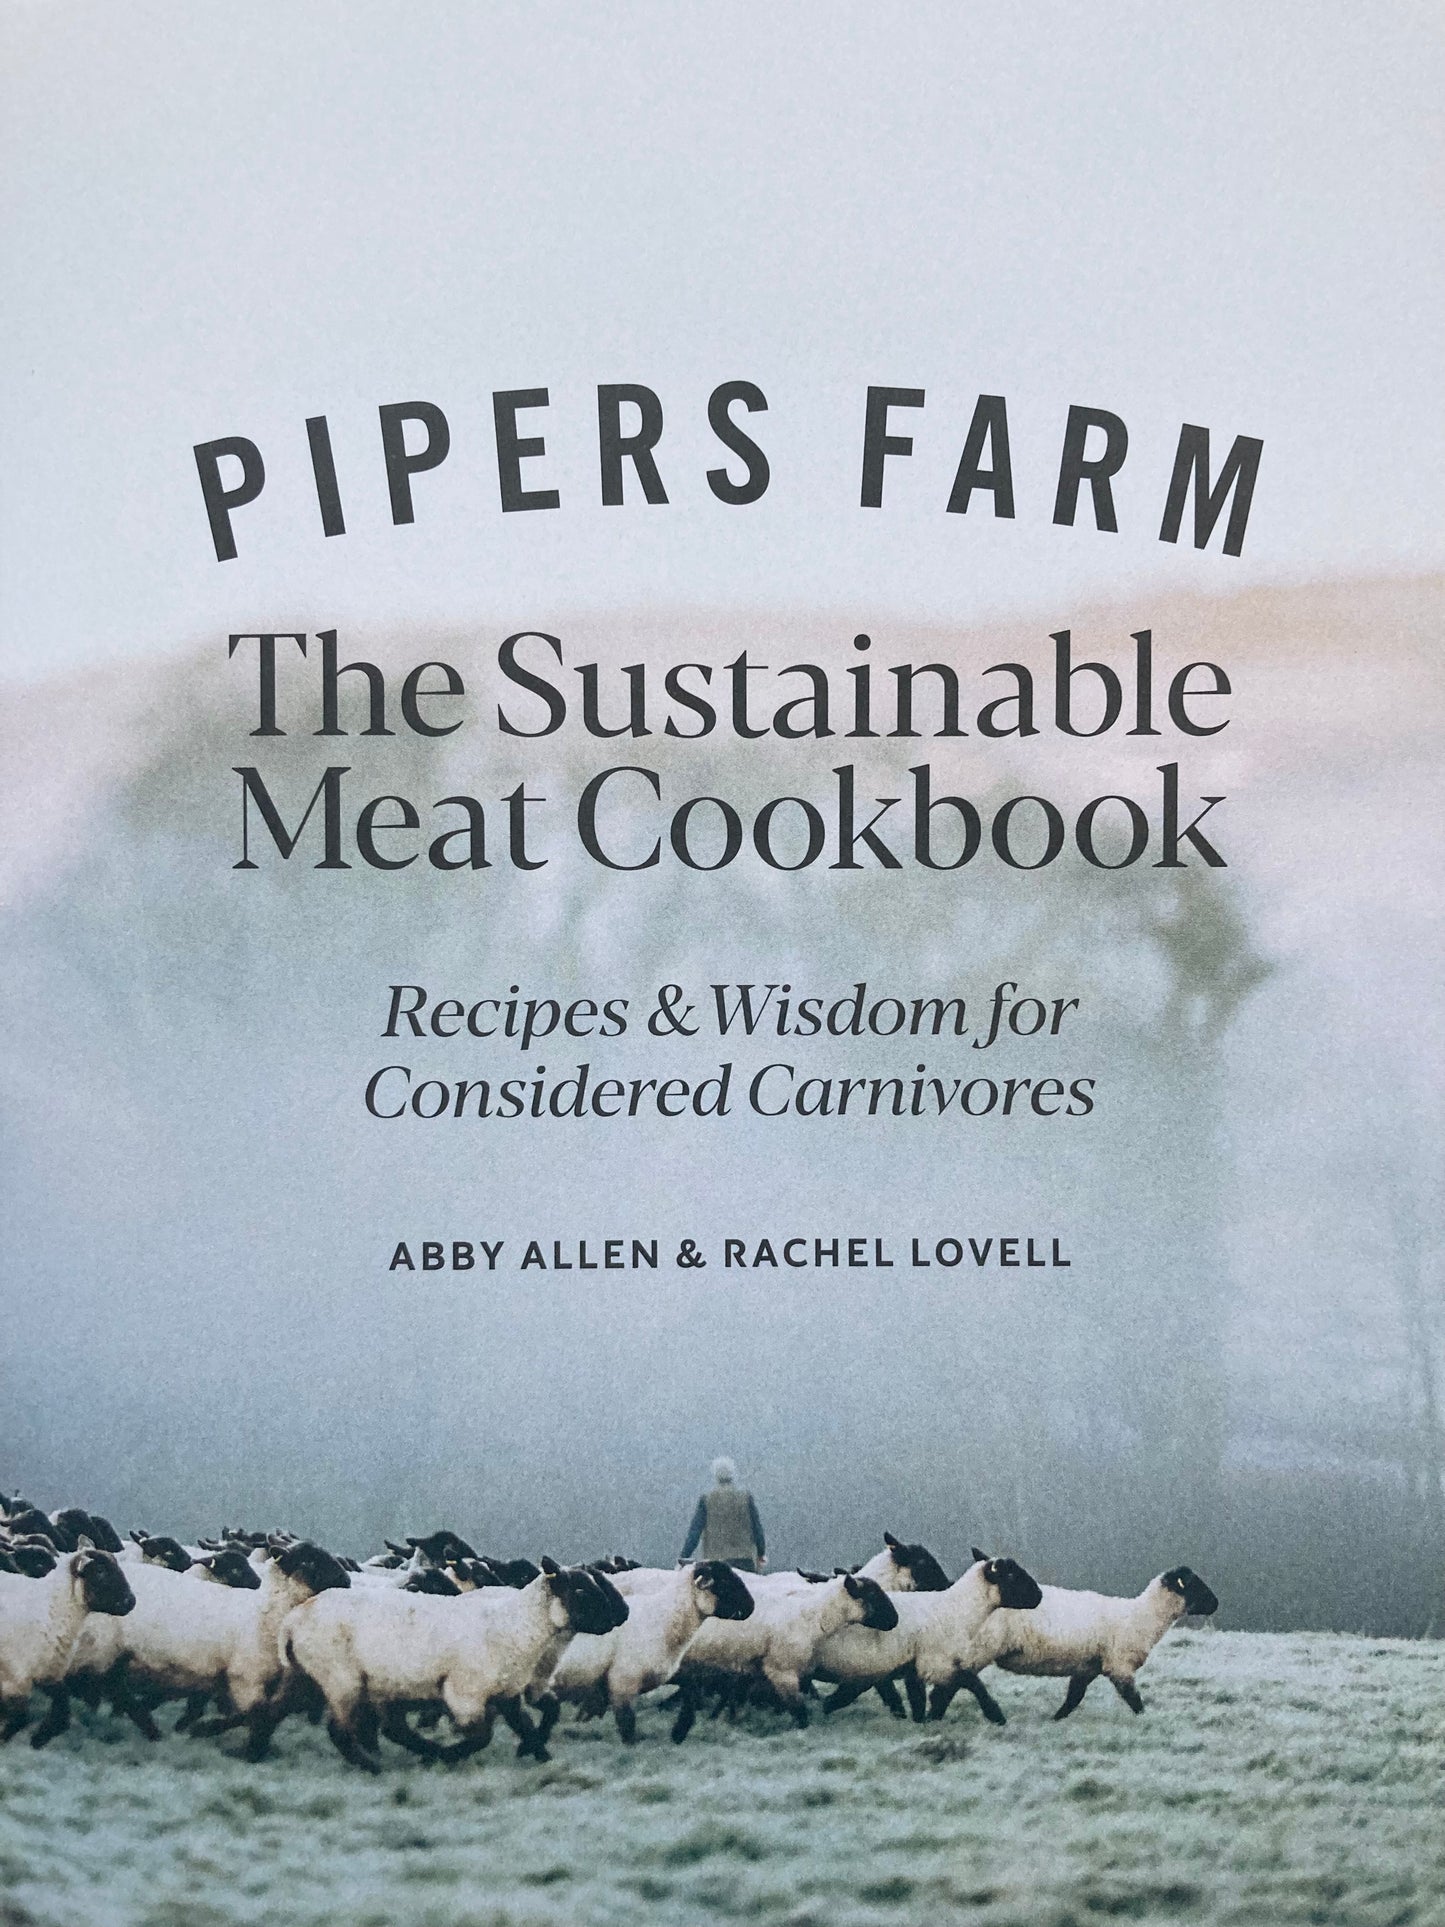 Parenting Resource Book - PIPER’S FARM COOKBOOK, Recipes & Wisdom